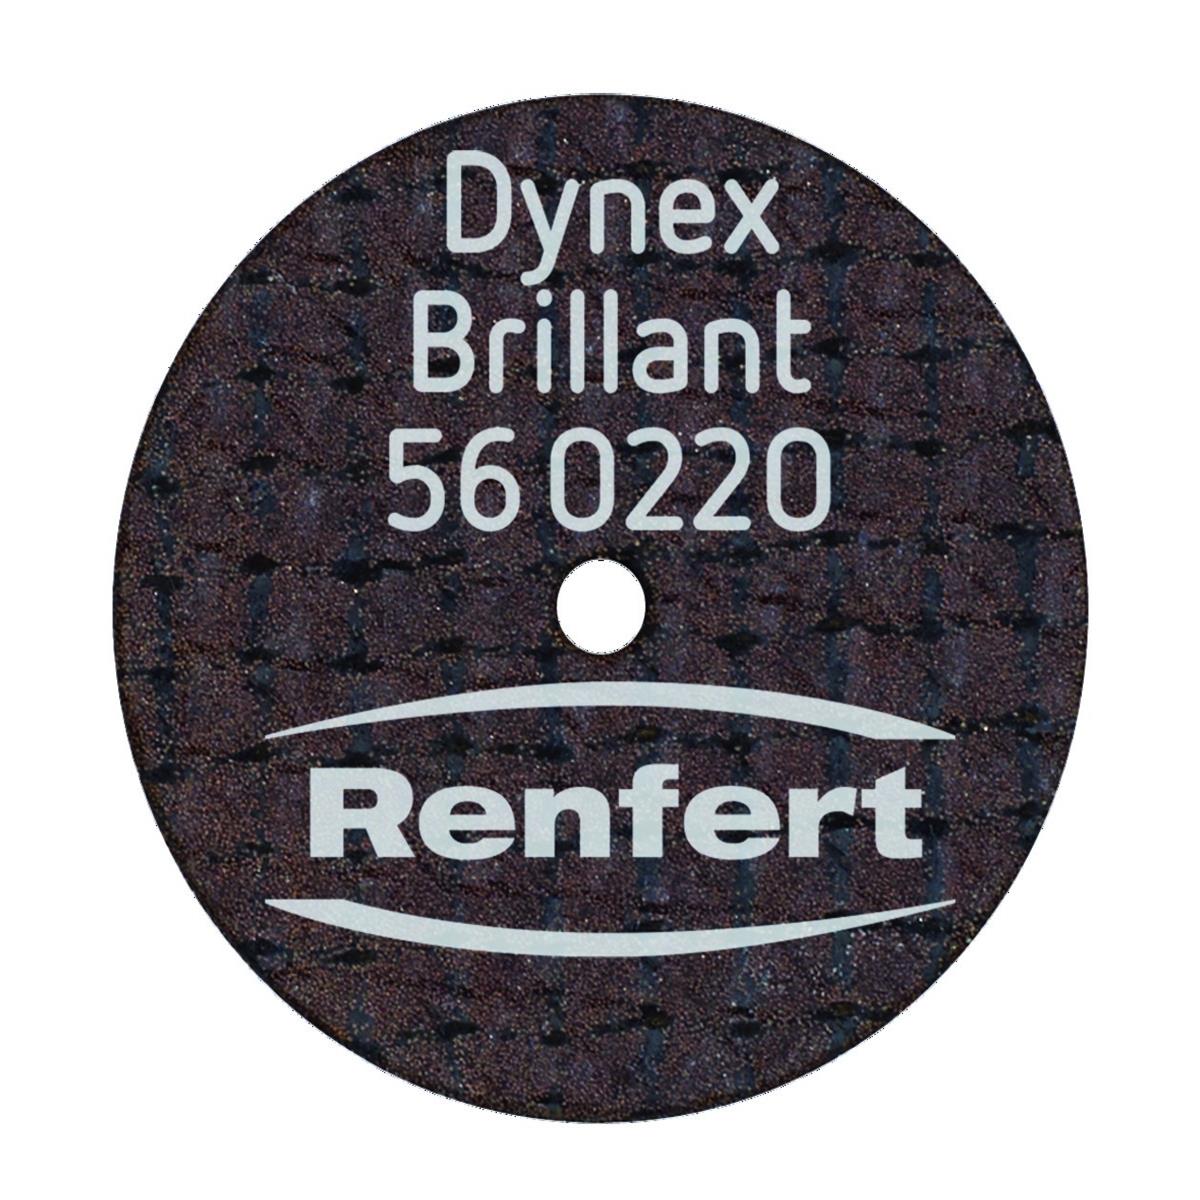 Disques Dynex Brillant RENFERT - 20 x 20 mm - La bote de 10